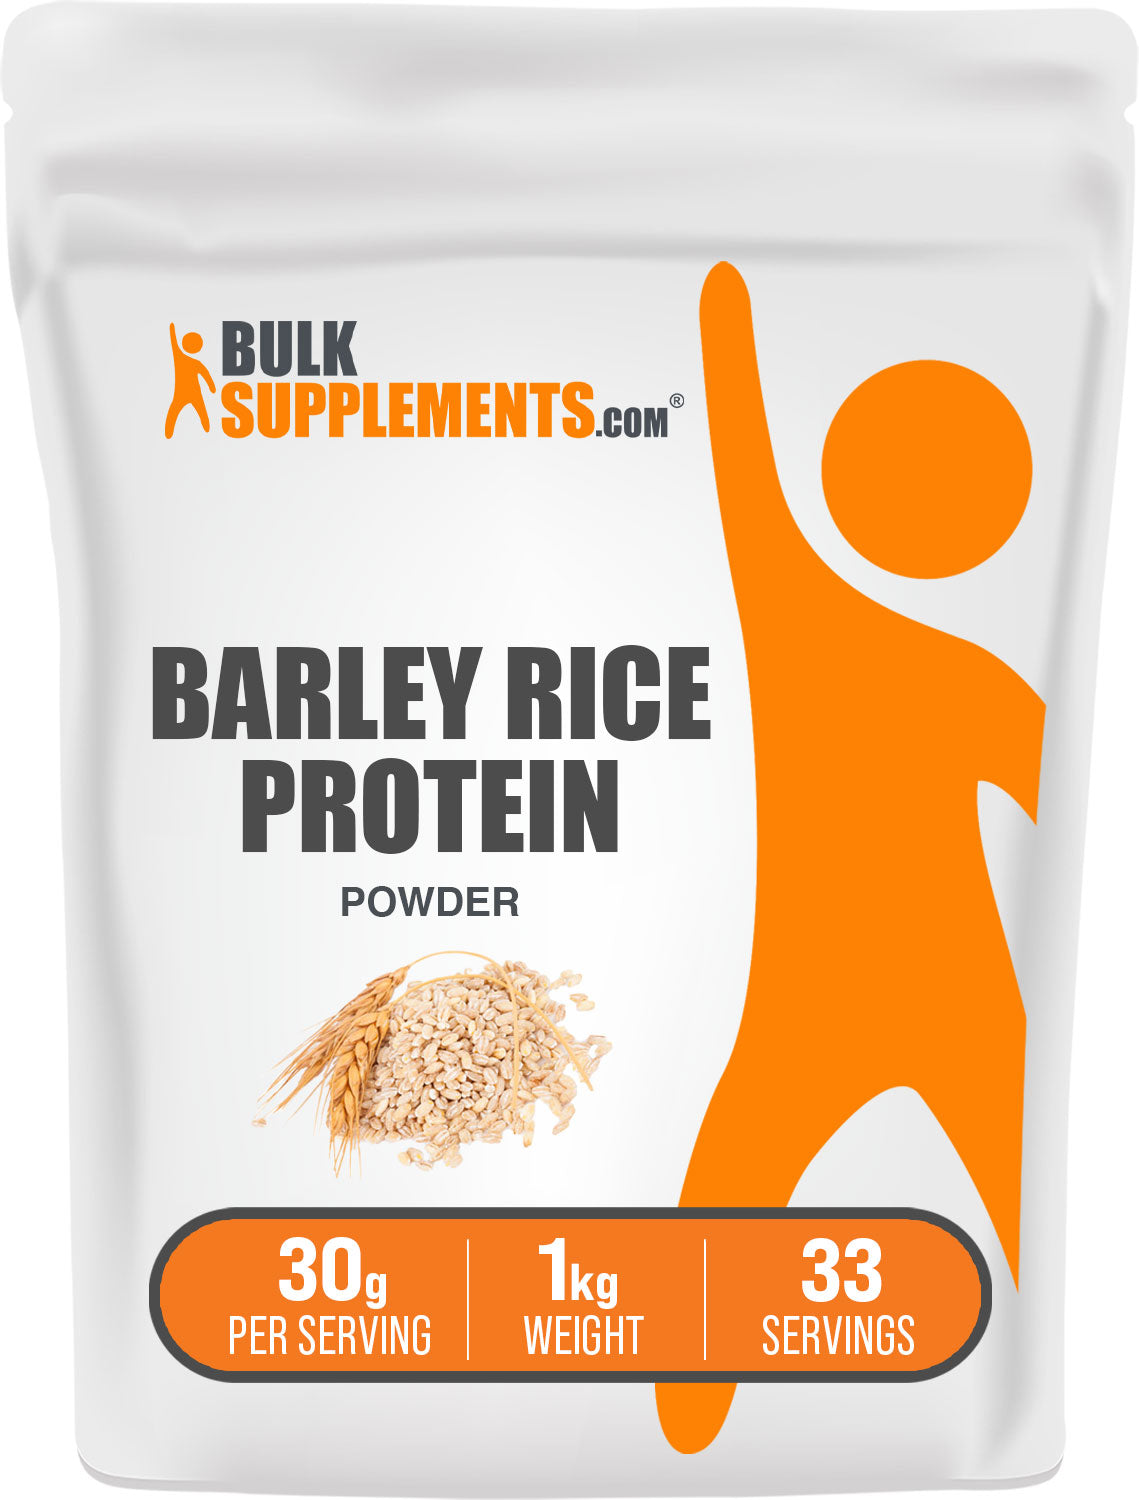 barley rice powder